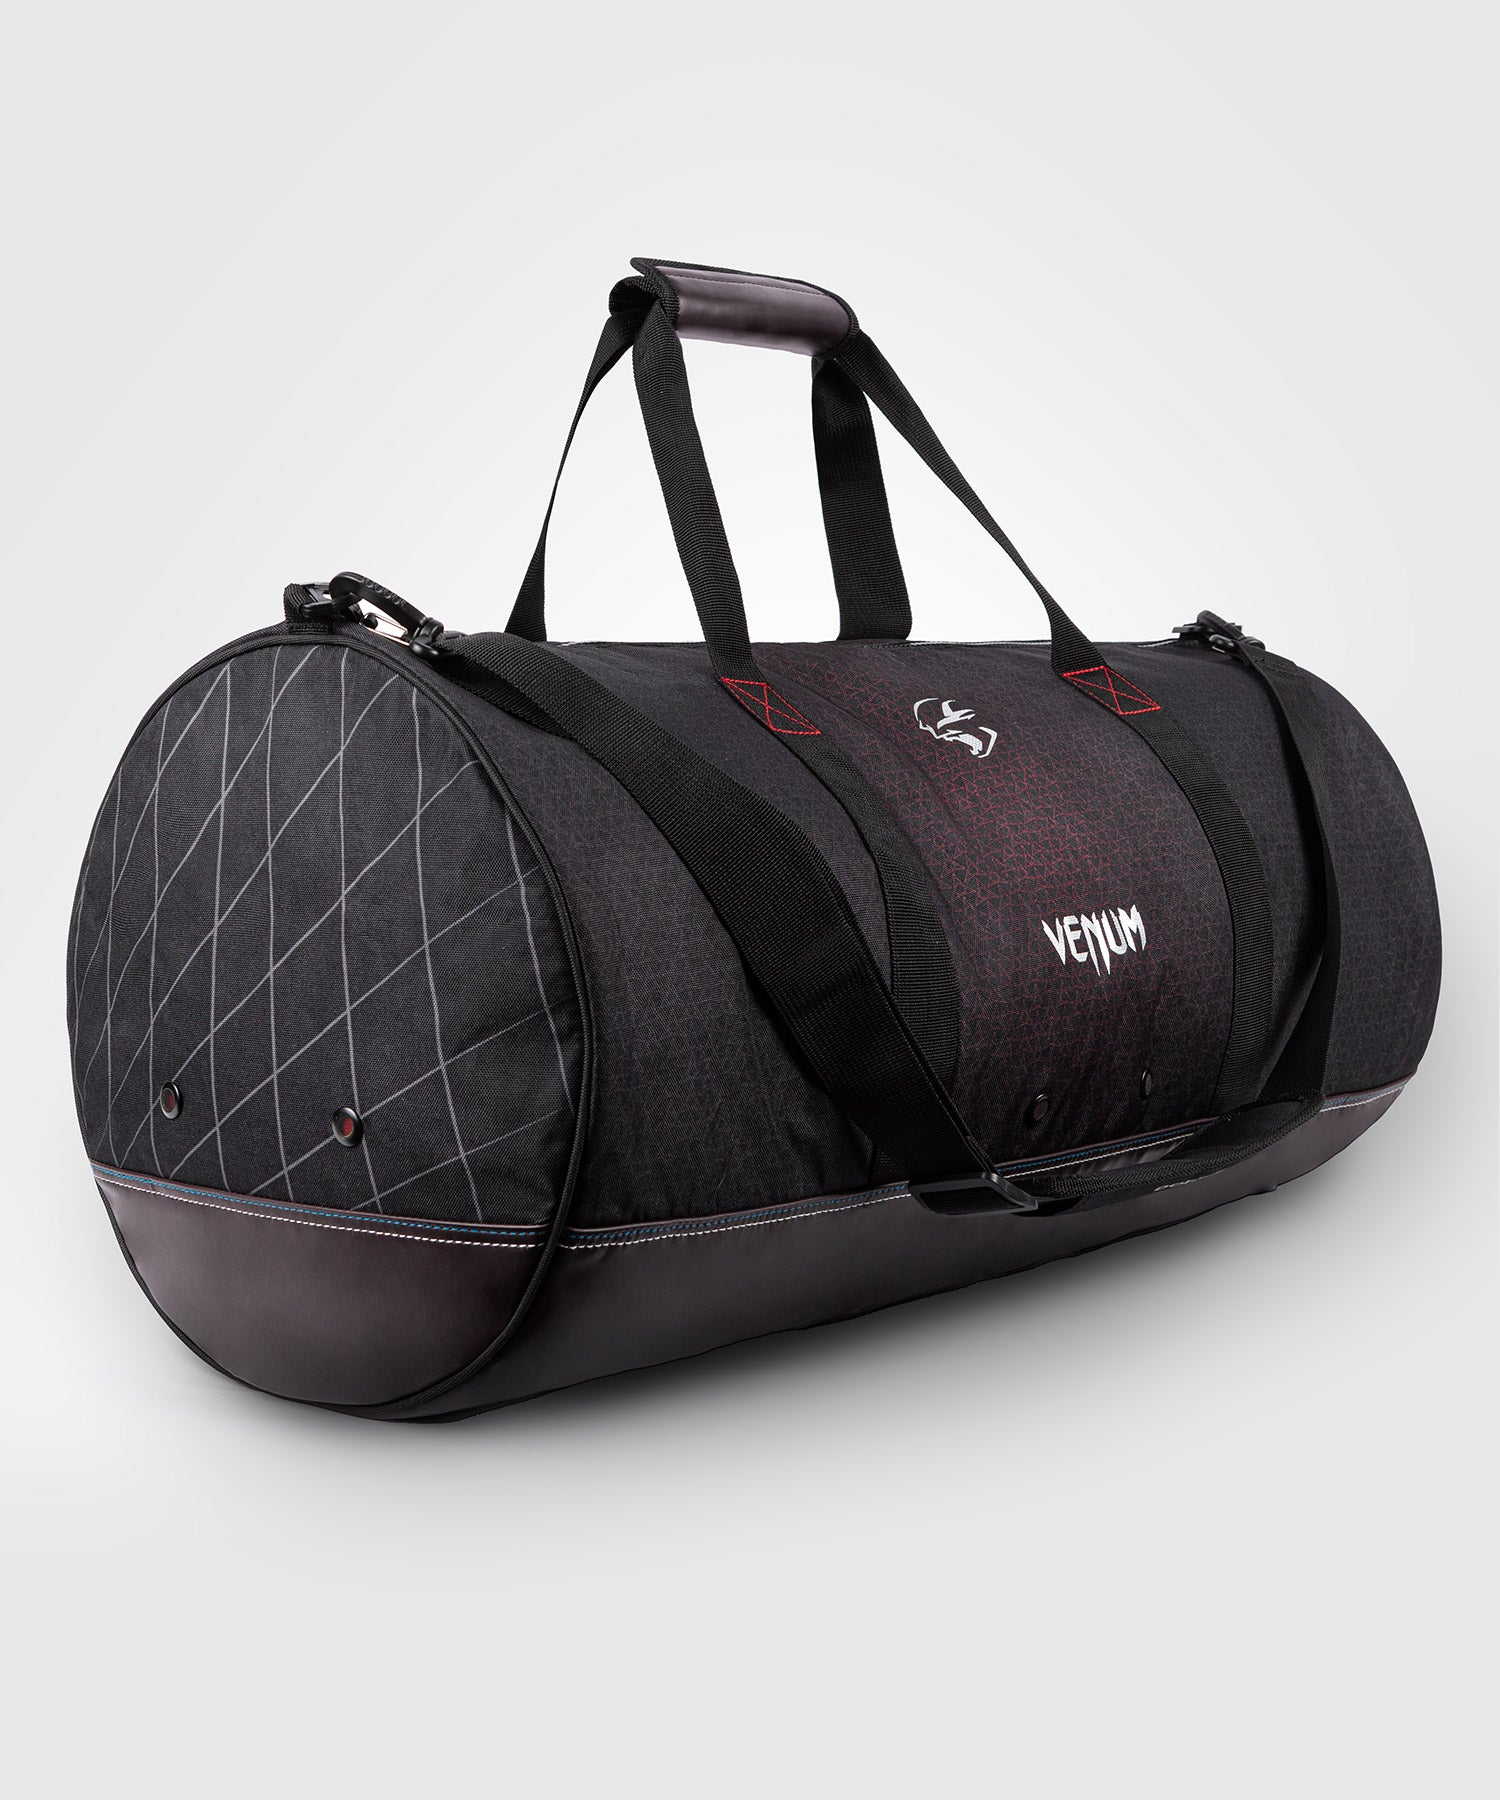 TFGEAR Banshee Cool Bag | Ultimate Outdoors